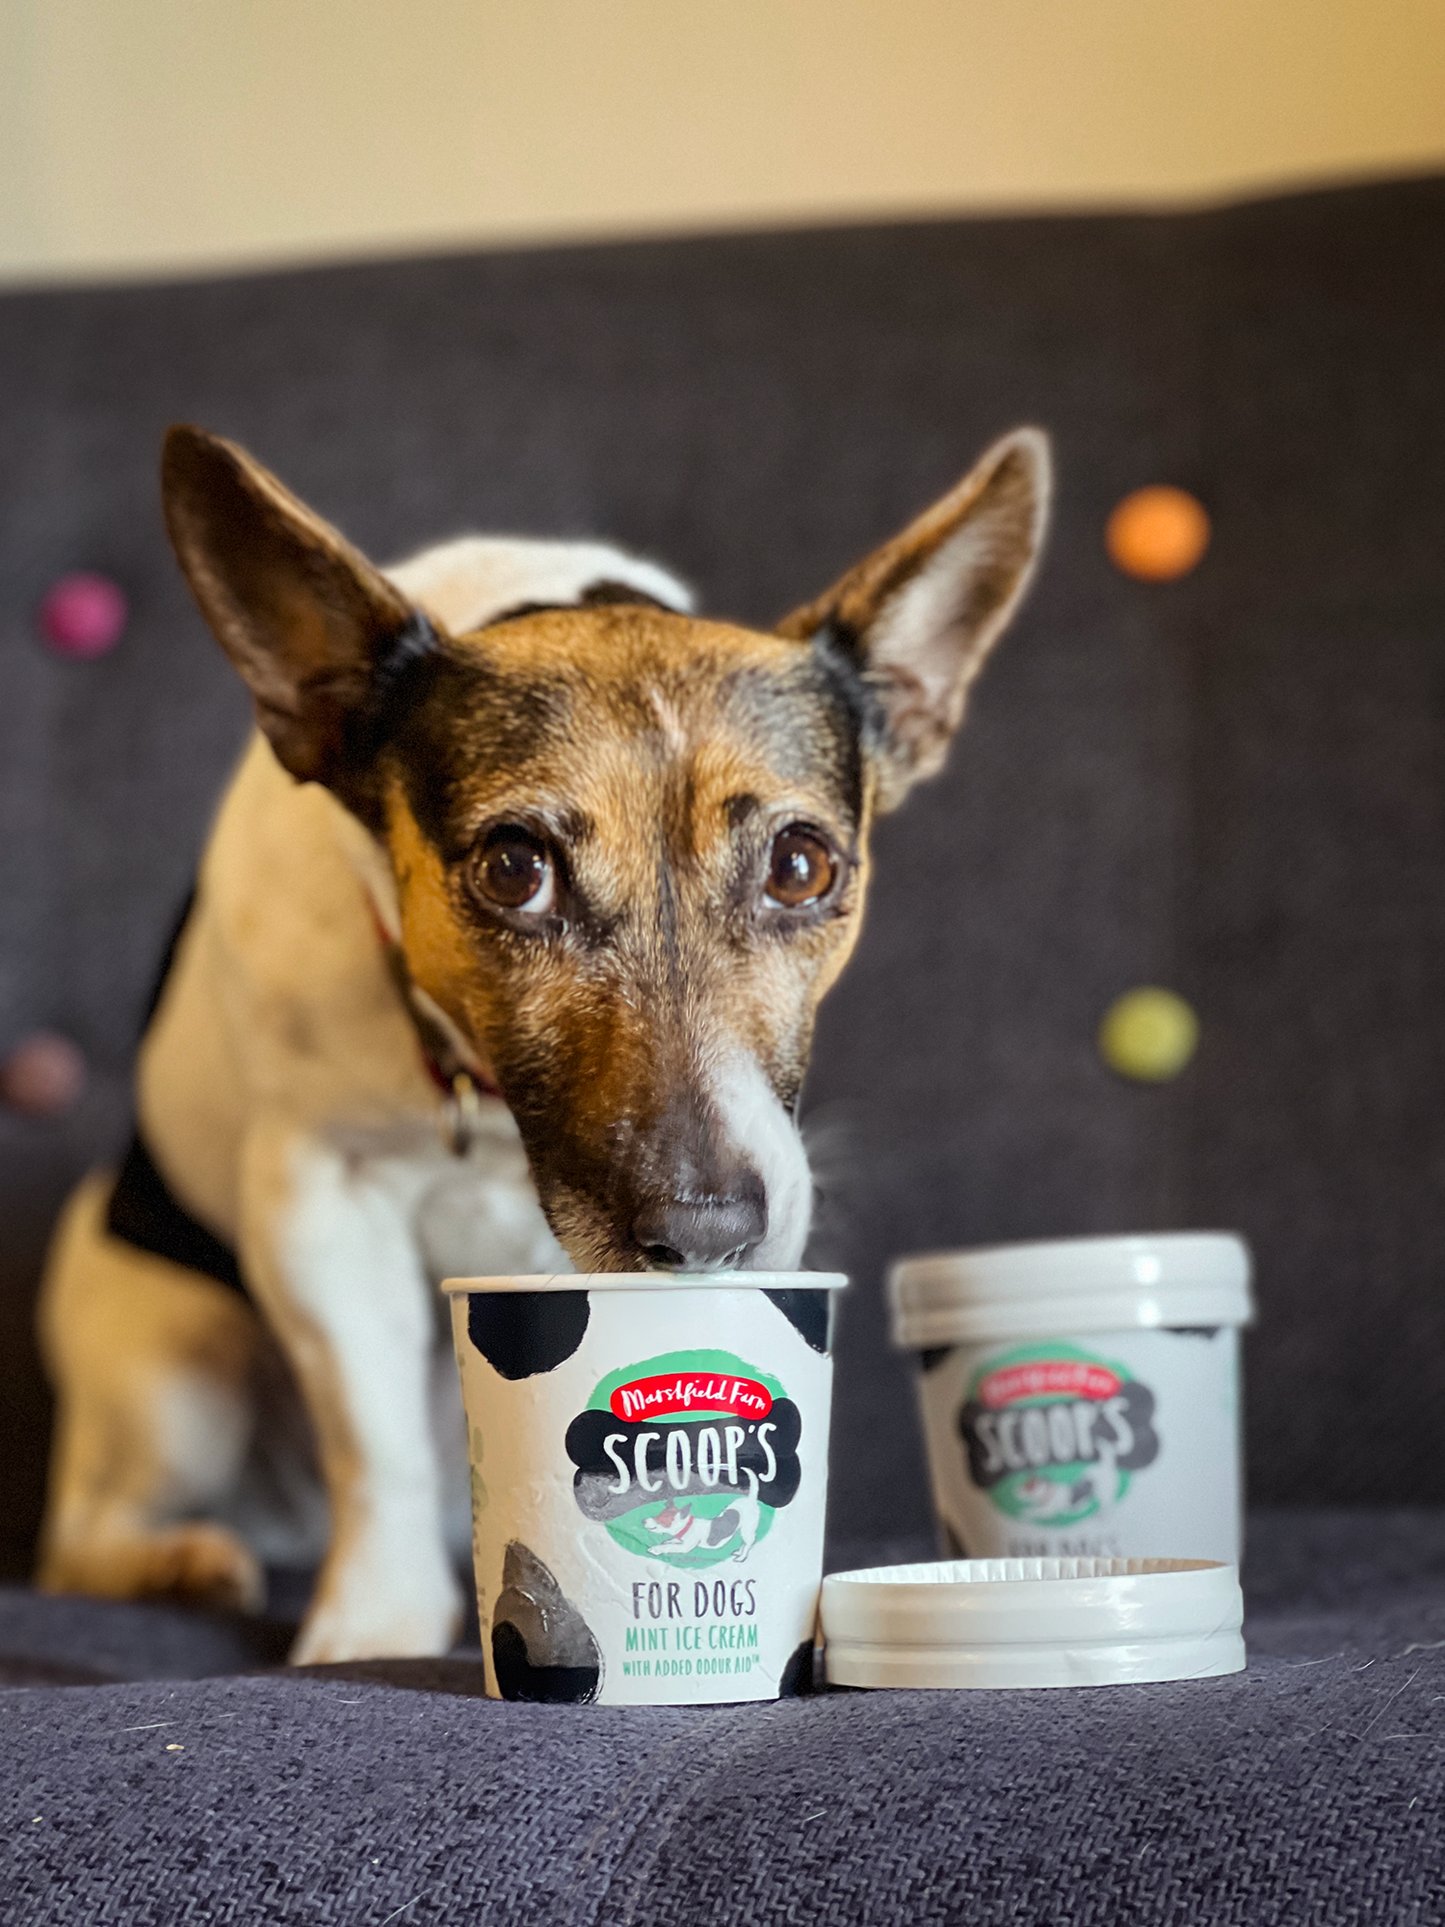 Scoop's Ice Cream for Dogs Mint